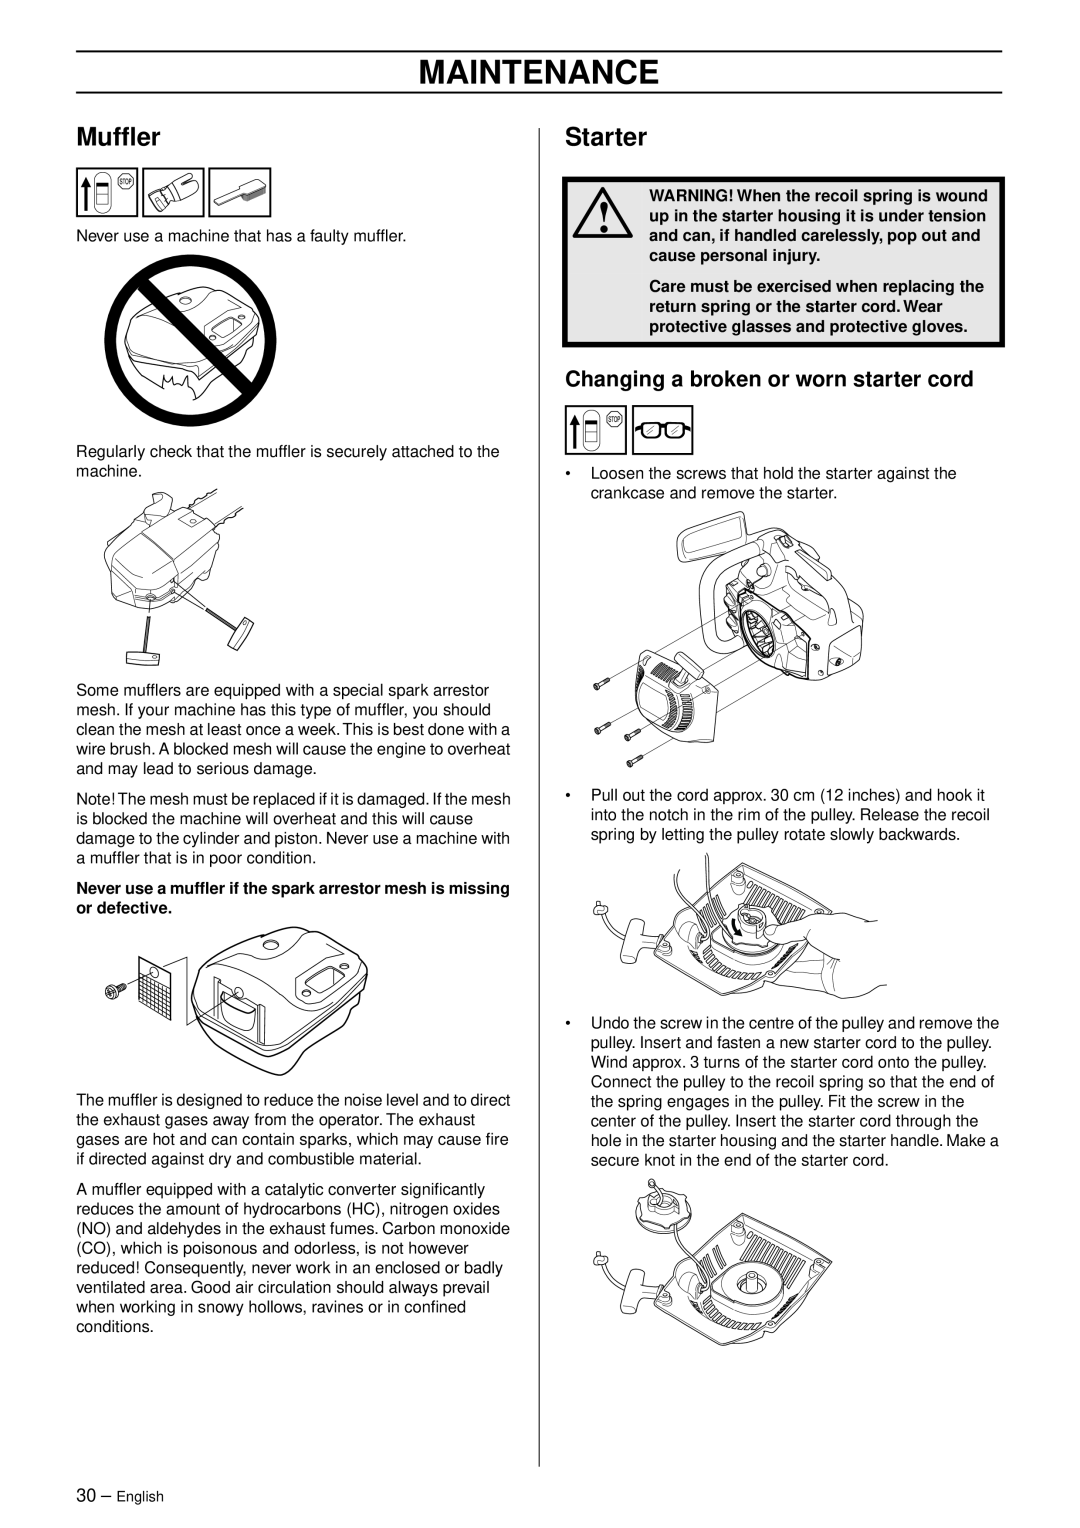 Husqvarna 338 XPT California, 1151439-95 manual Mufﬂer, Starter, Changing a broken or worn starter cord, Maintenance 